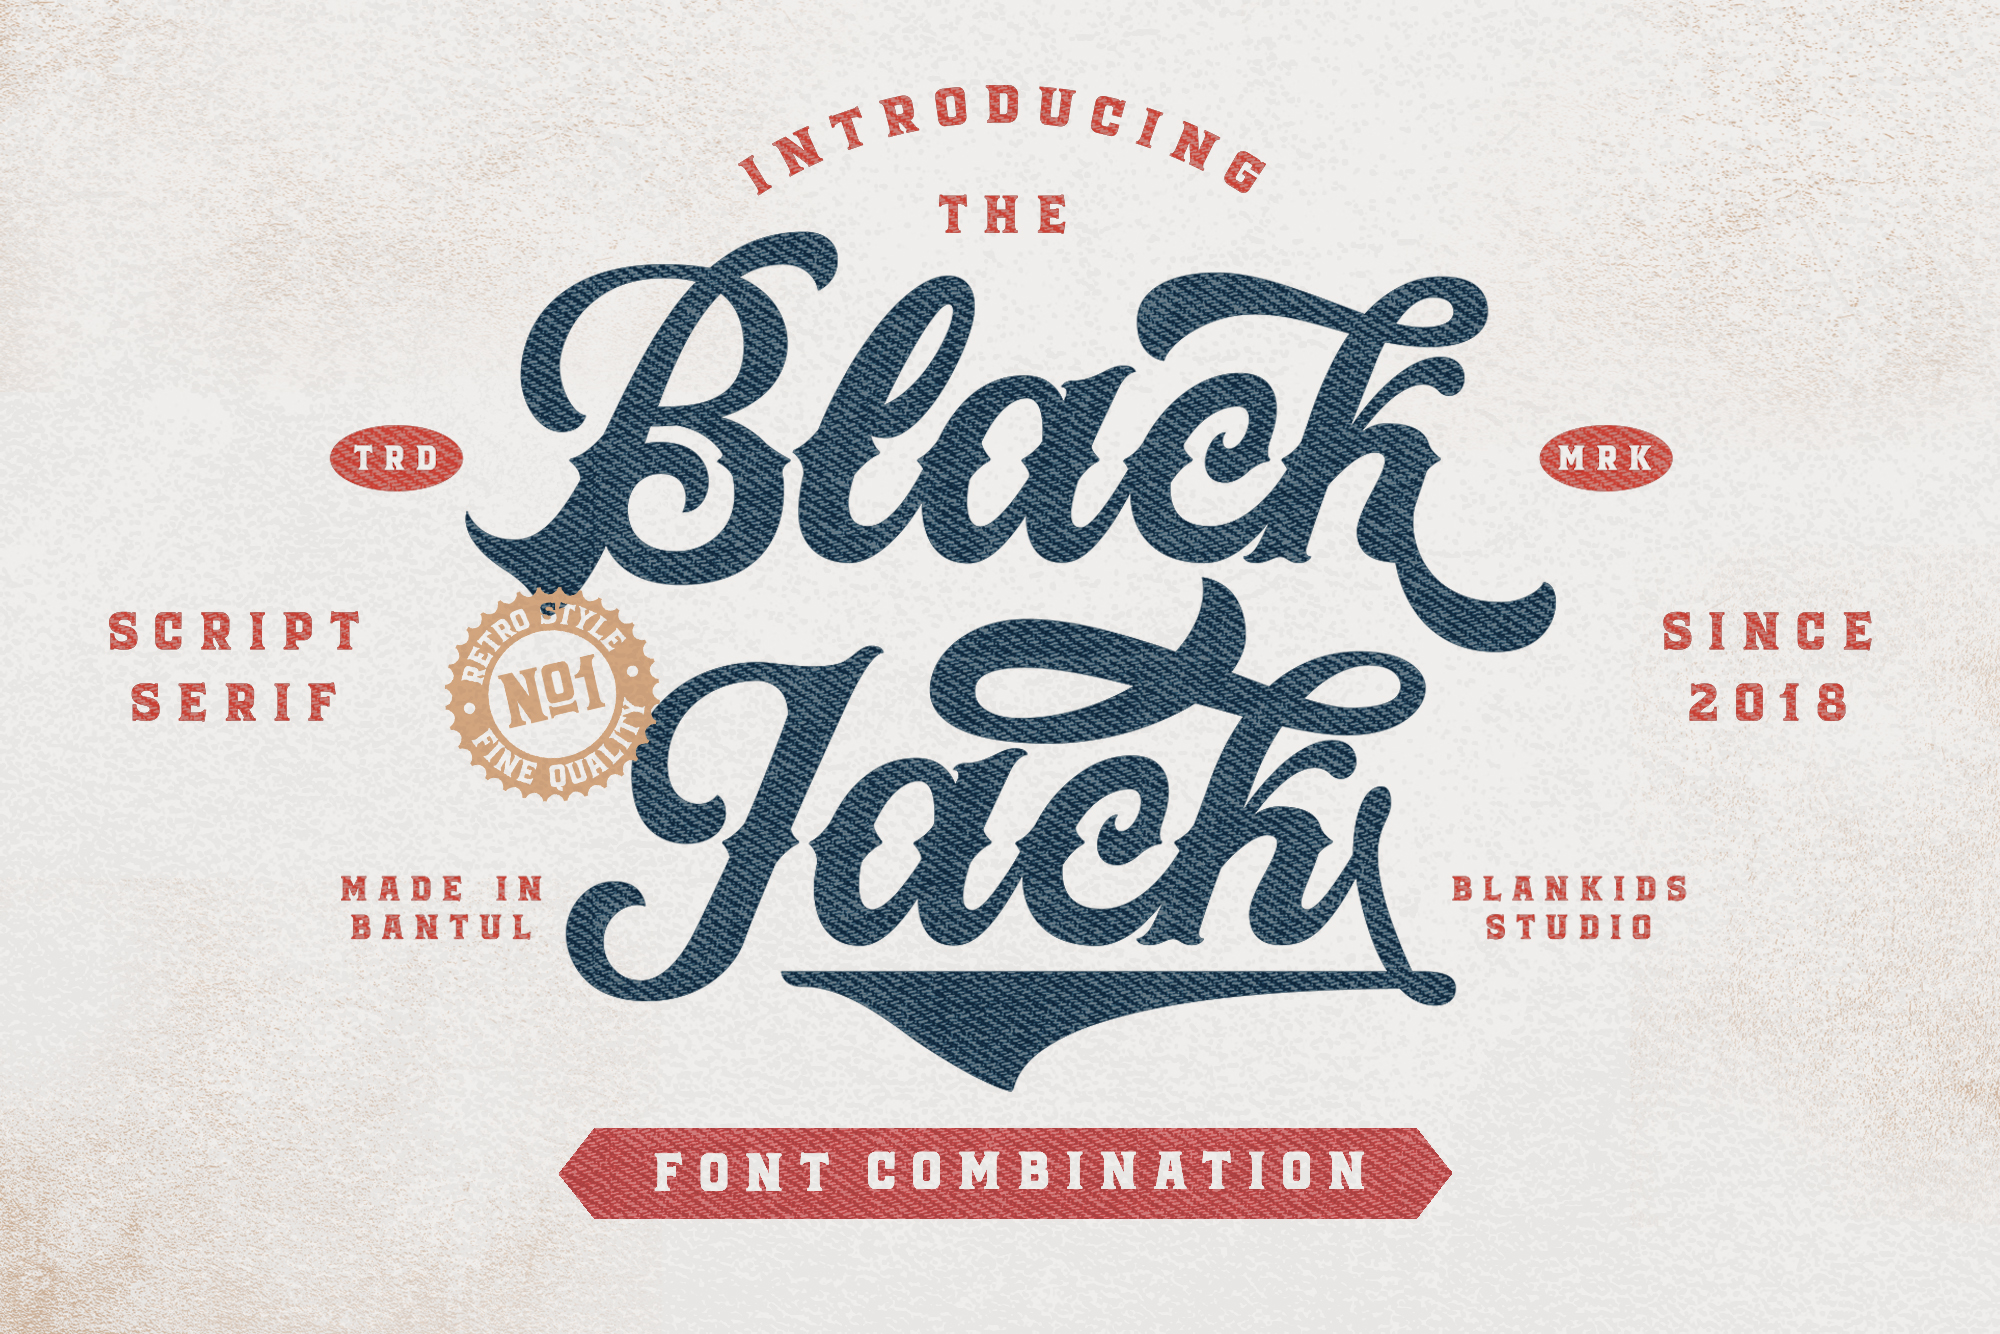 Black Jack - Image of the Black Jack Font Combination by Blankids.